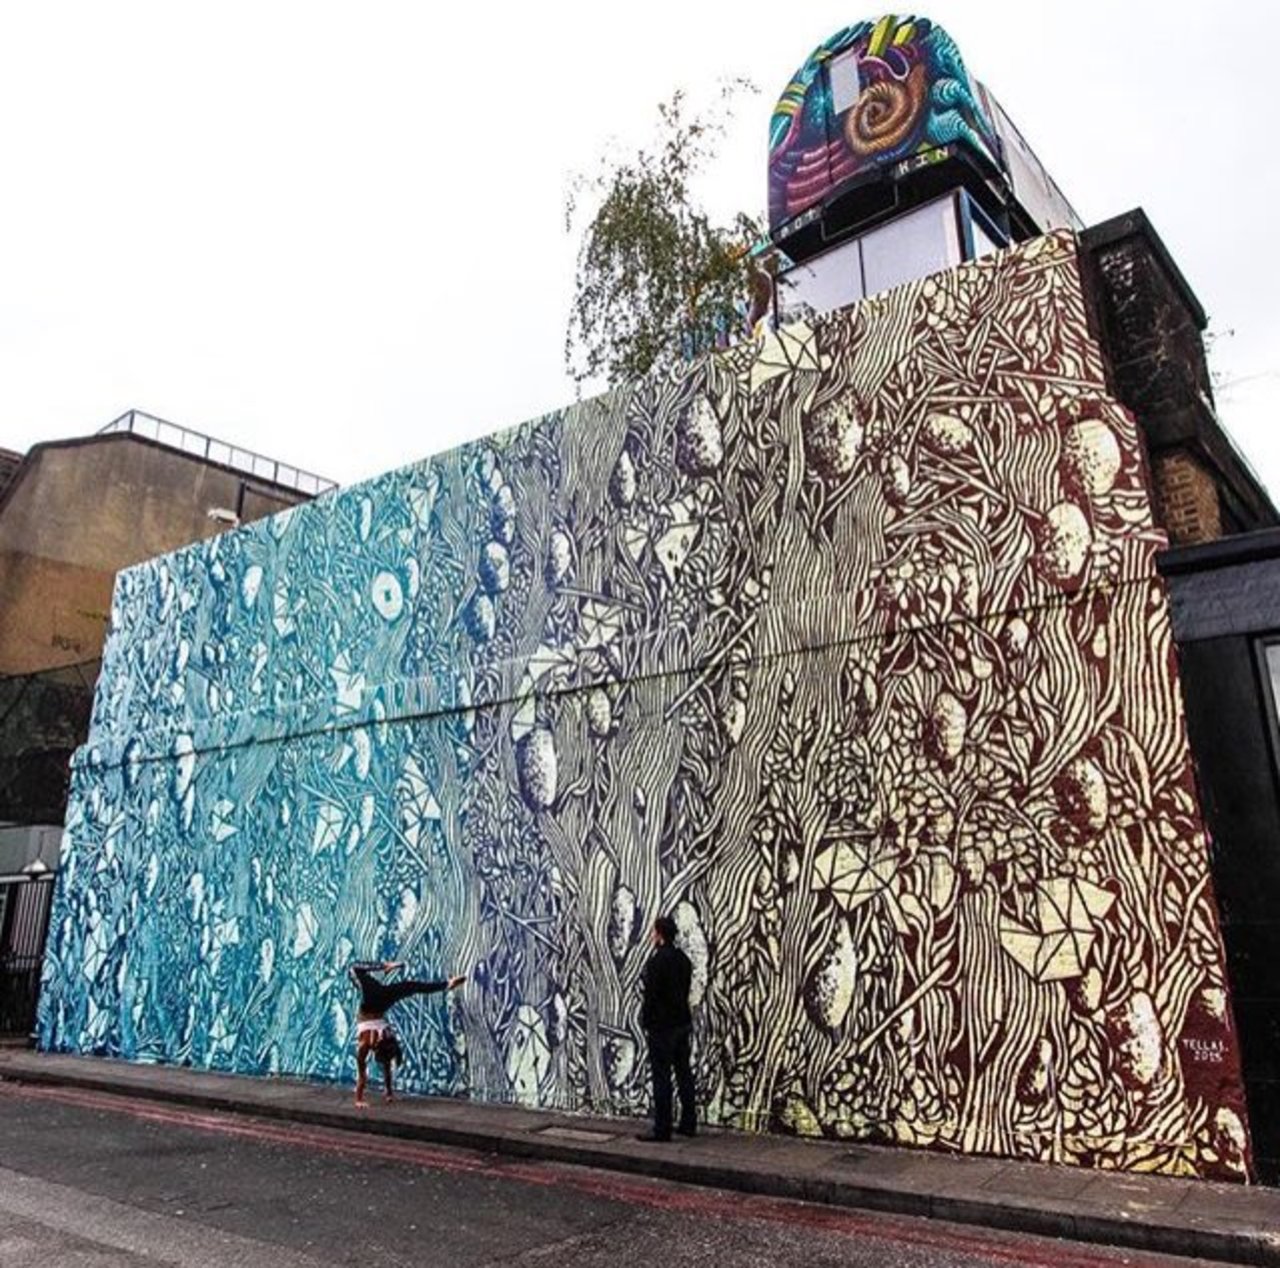 RT:GoogleStreetArt New Street Art by Tellas in Shoreditch London 

#art #graffiti #mural #streetart https://t.co/XnkBD8iiAz